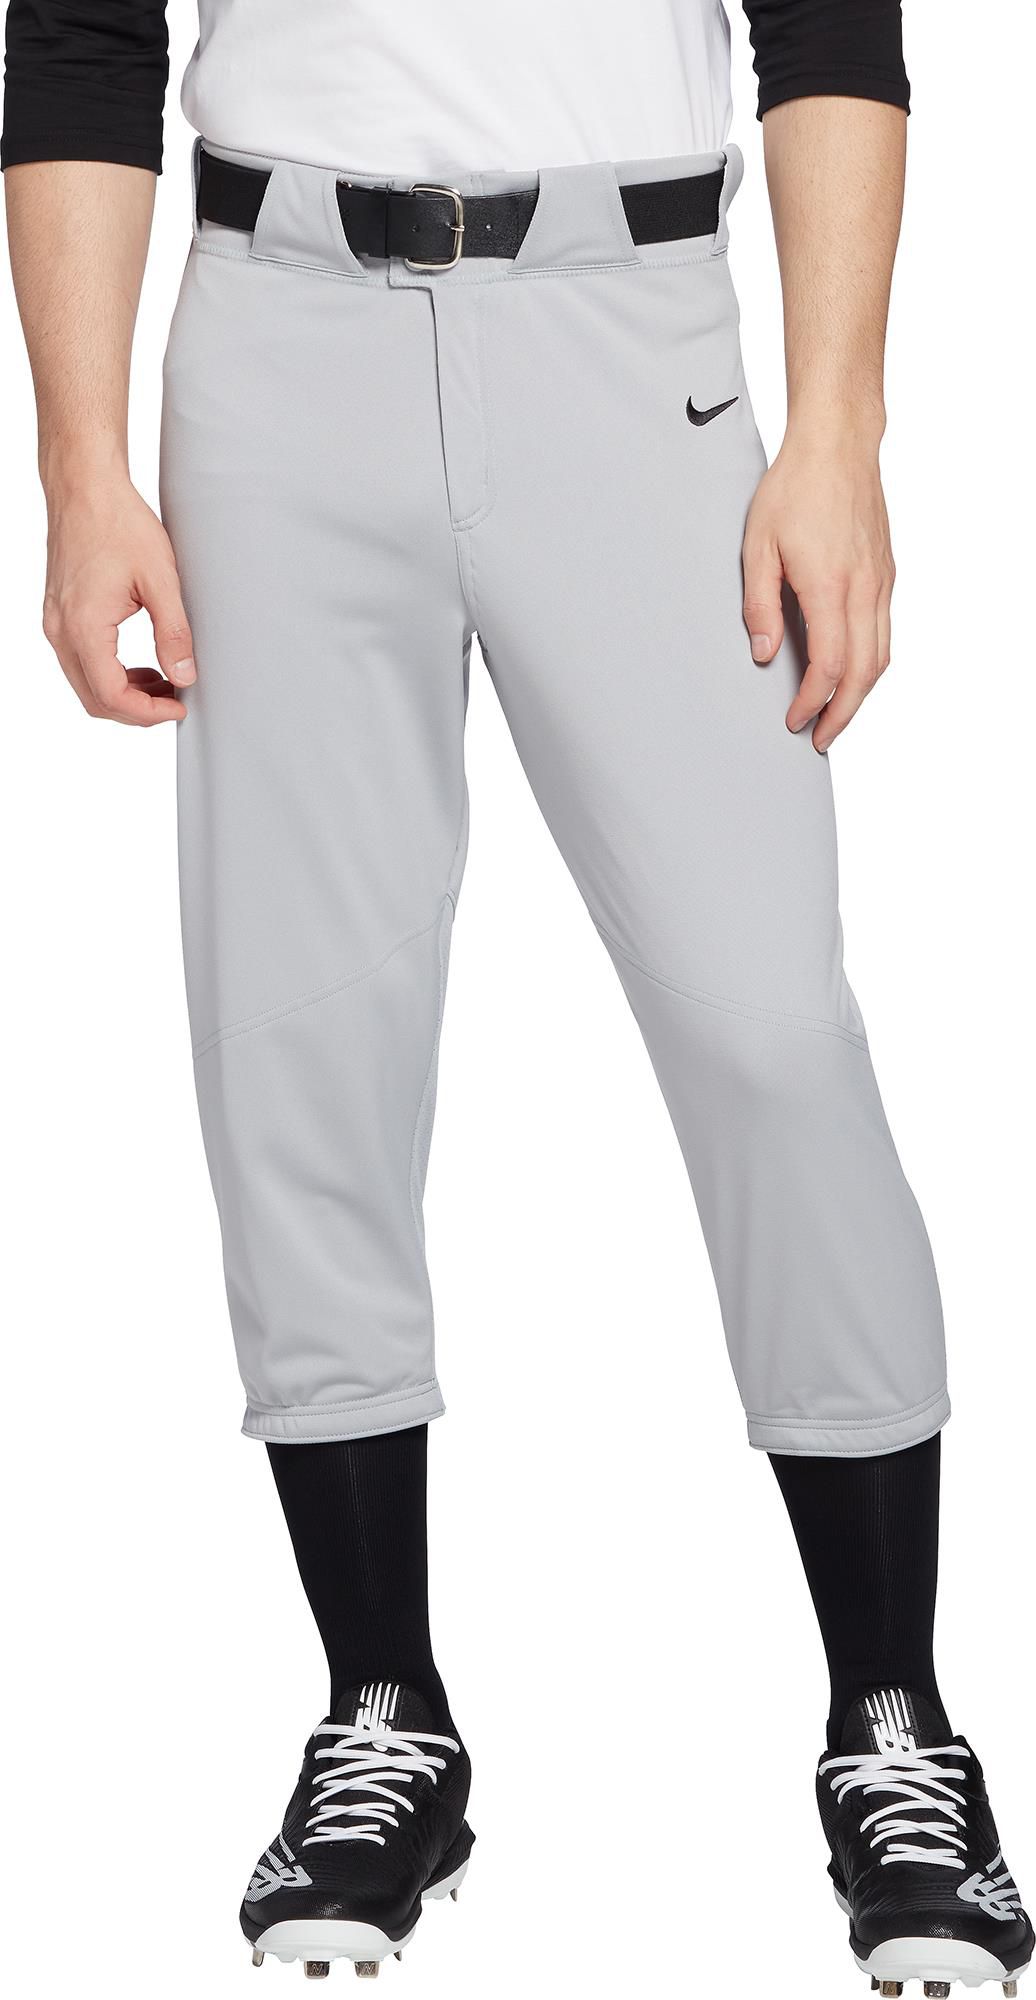 nike men's vapor select high piped baseball pants